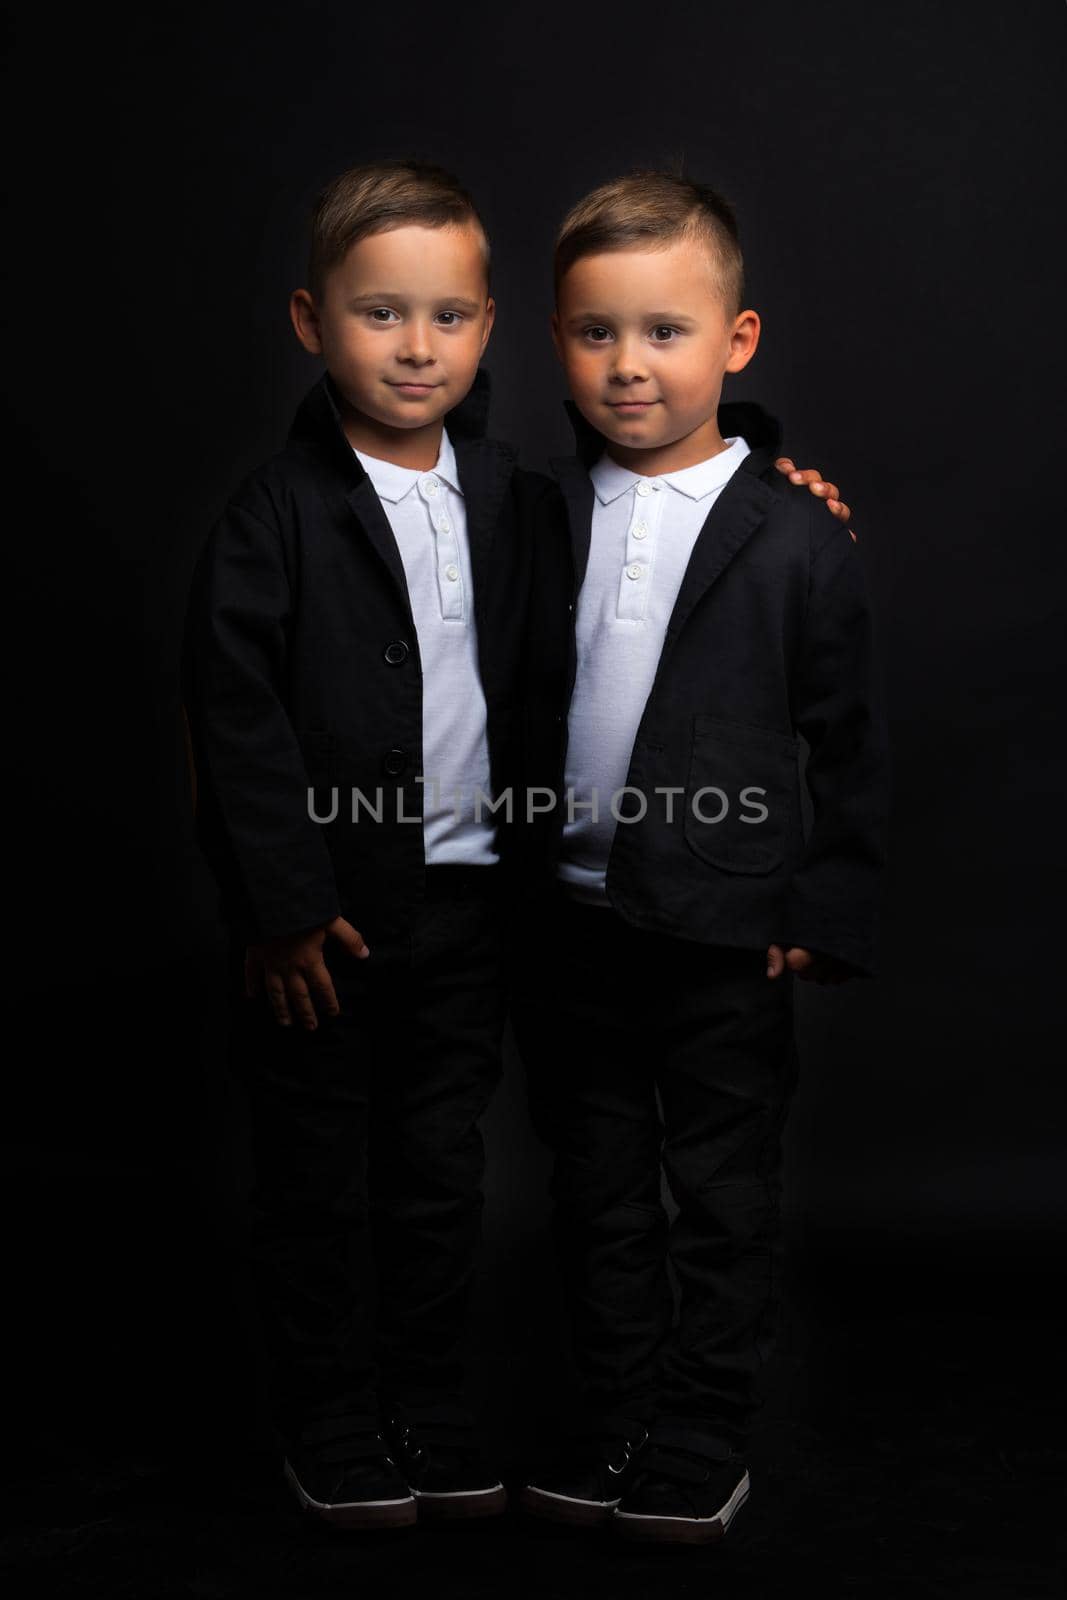 Two beautiful boys in black suits by kolesnikov_studio